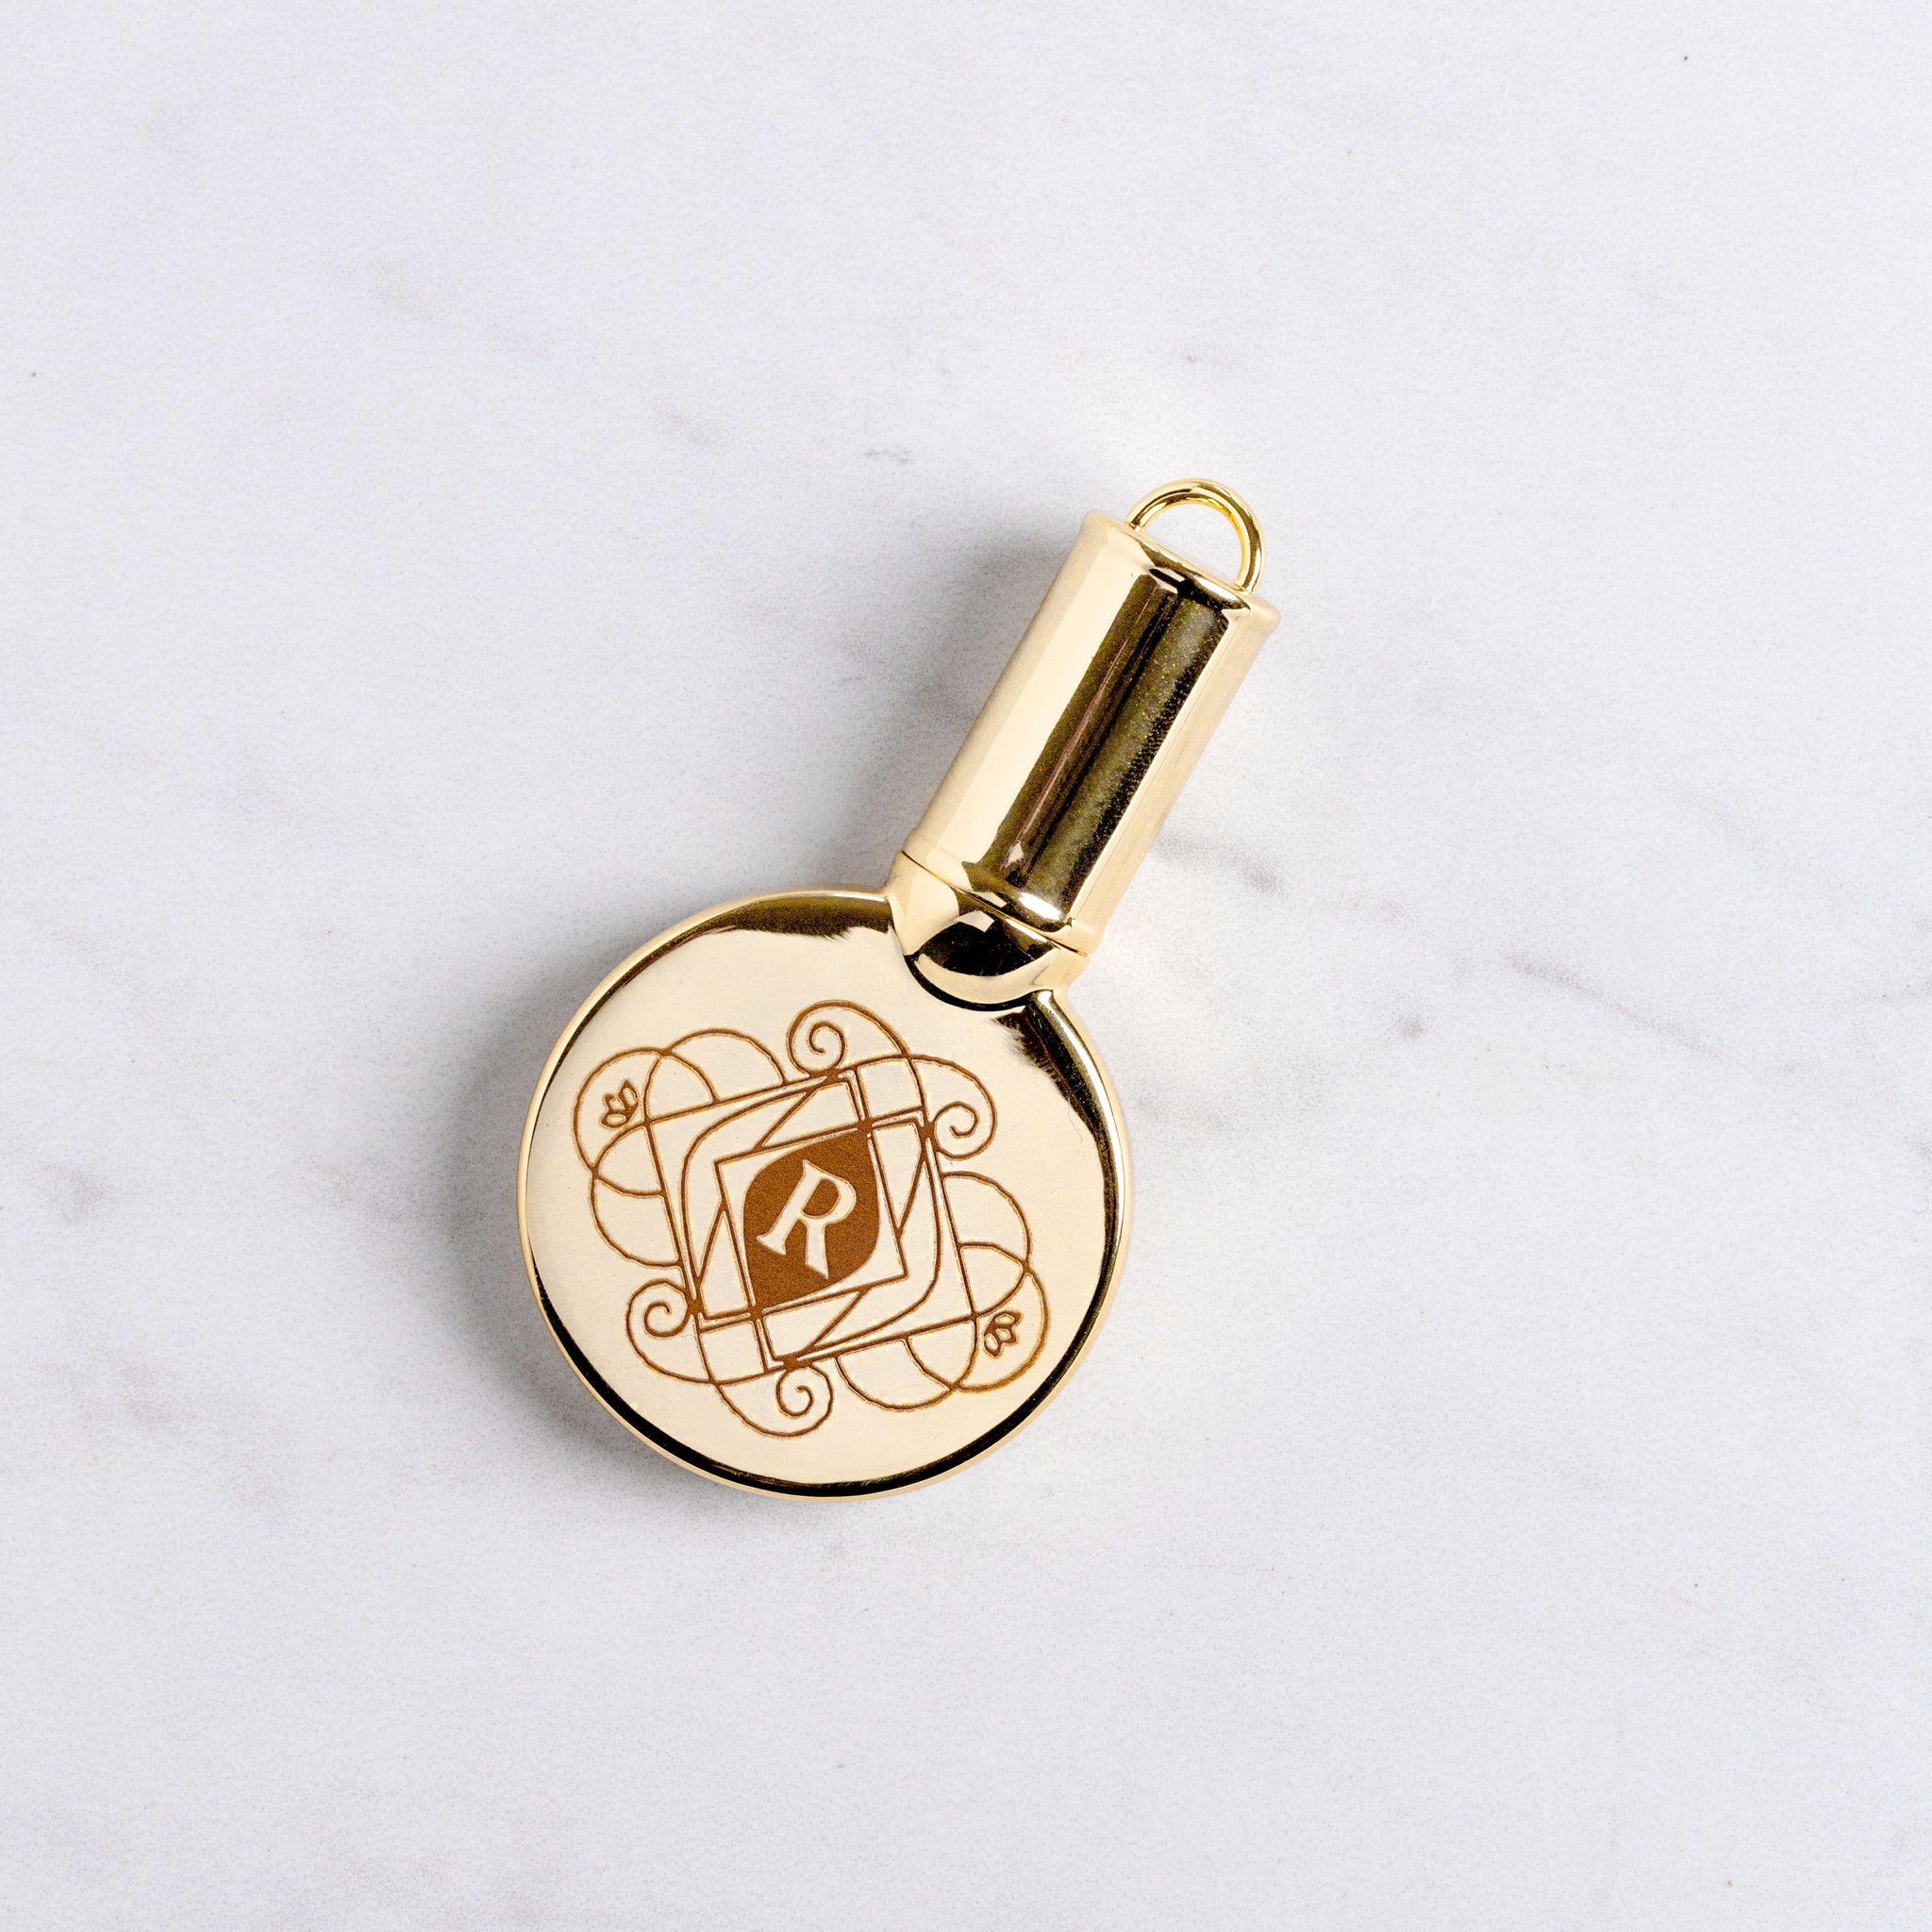 Perfume Dispensing Keychain - Romantic Swirl Design